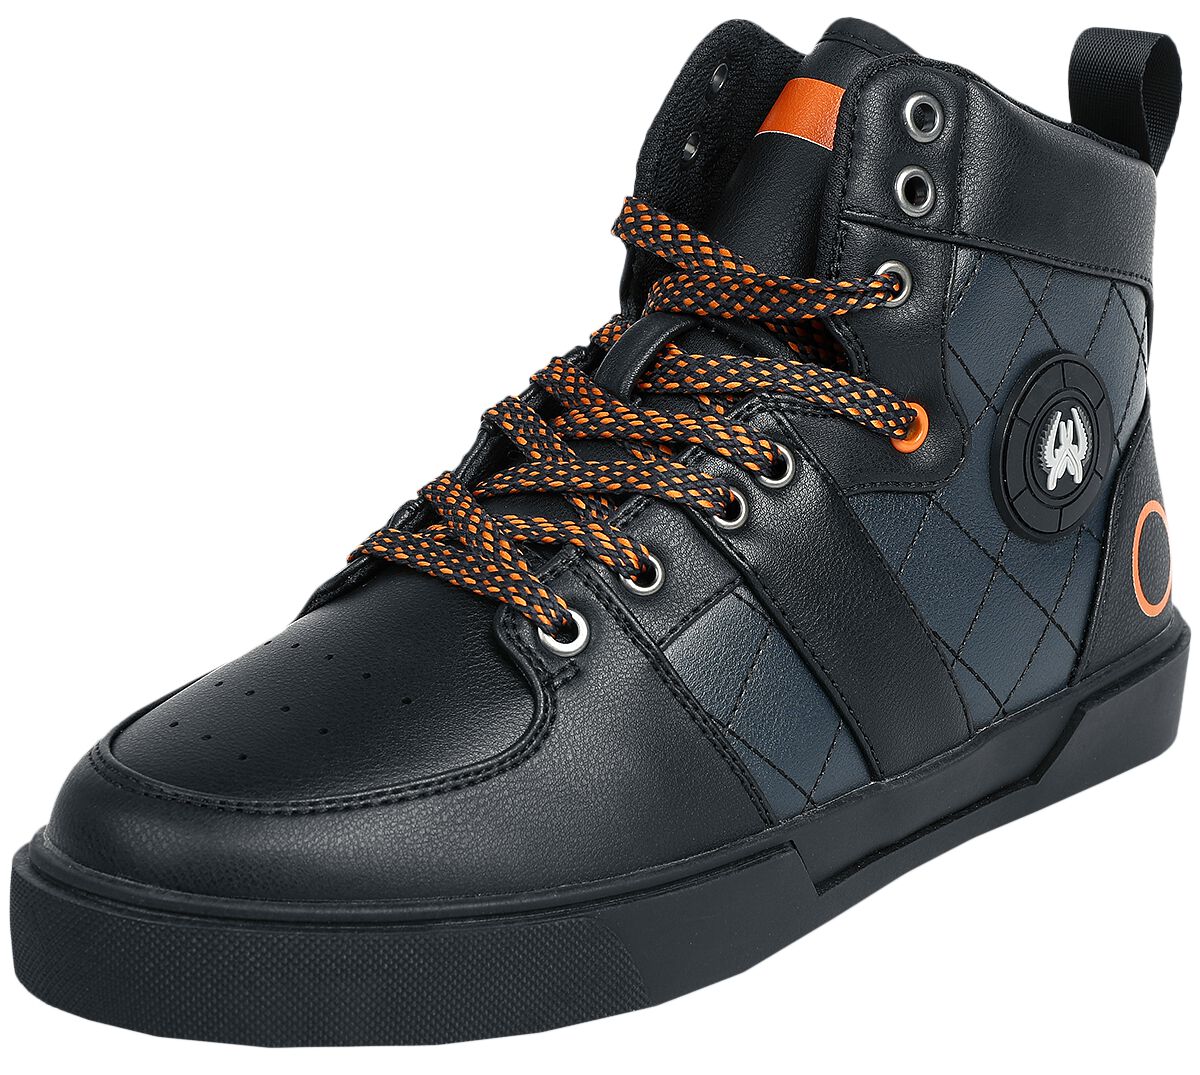 Counter-Strike - Gaming Sneaker high - Global Offensive - CS:GO - EU37 bis EU44 - Größe EU41 - schwarz/blau  - EMP exklusives Merchandise!